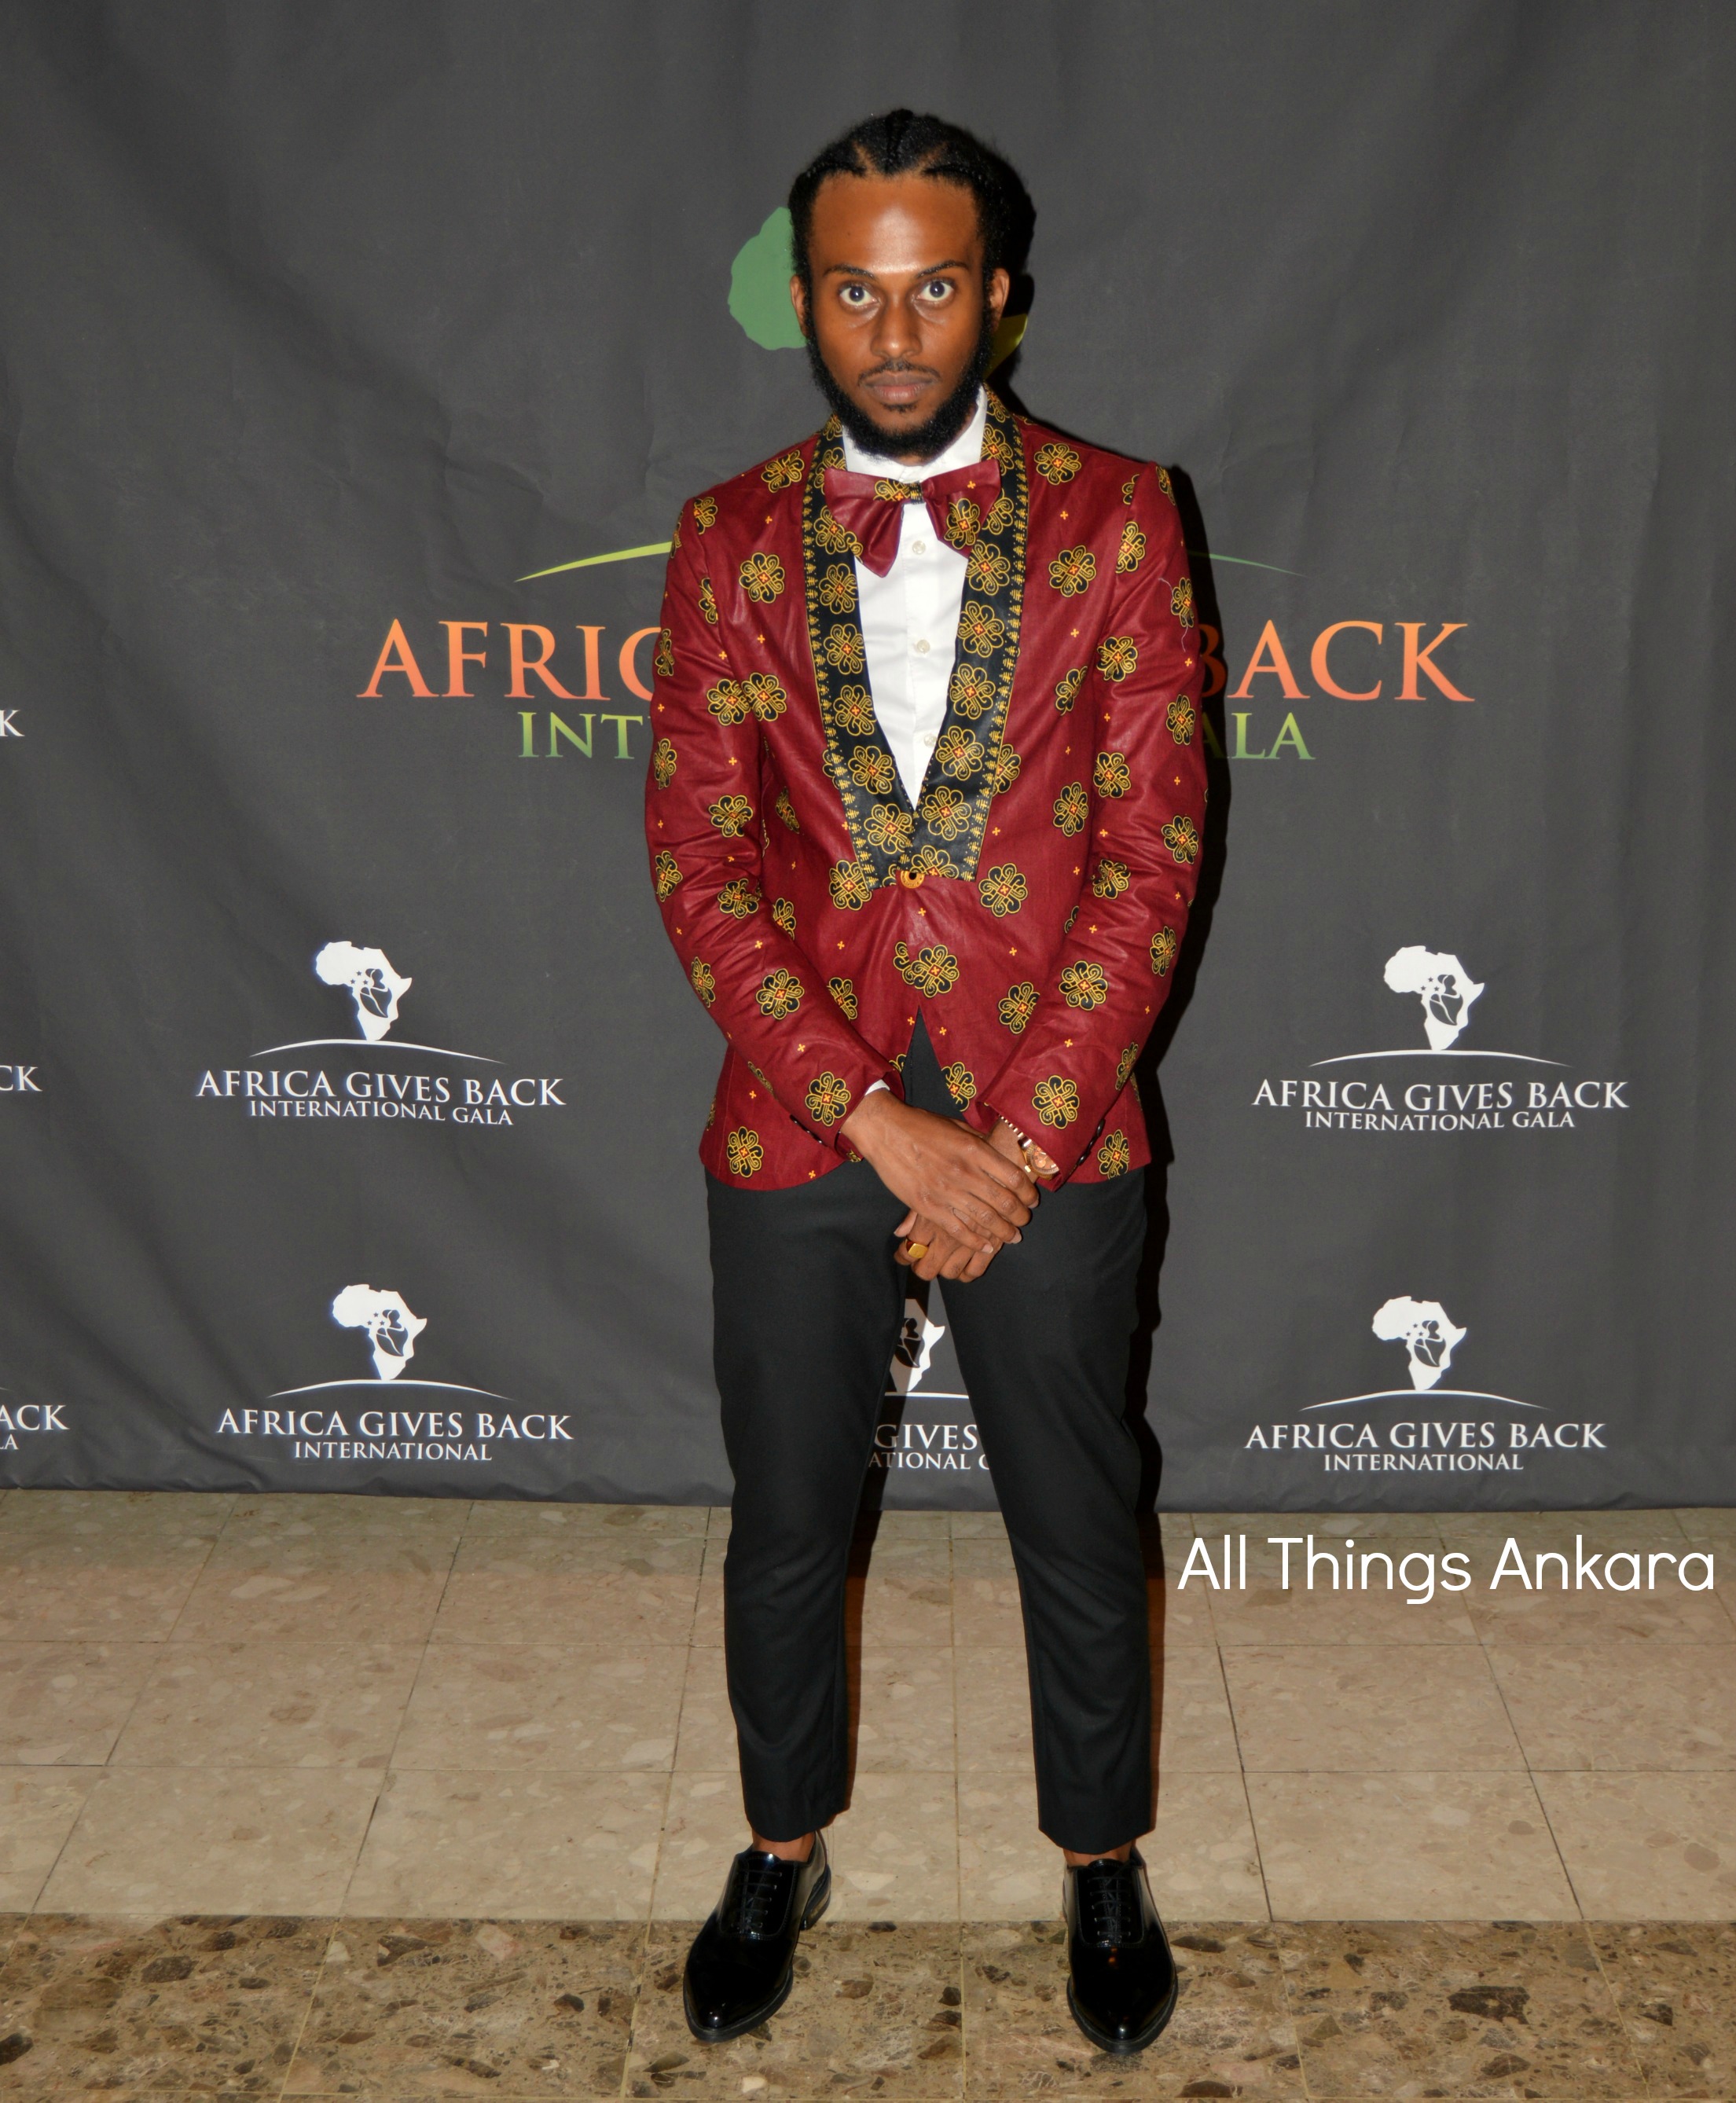 Gala-All Things Ankara's Best Dressed Men at Africa Gives Back International Gala 2016 4